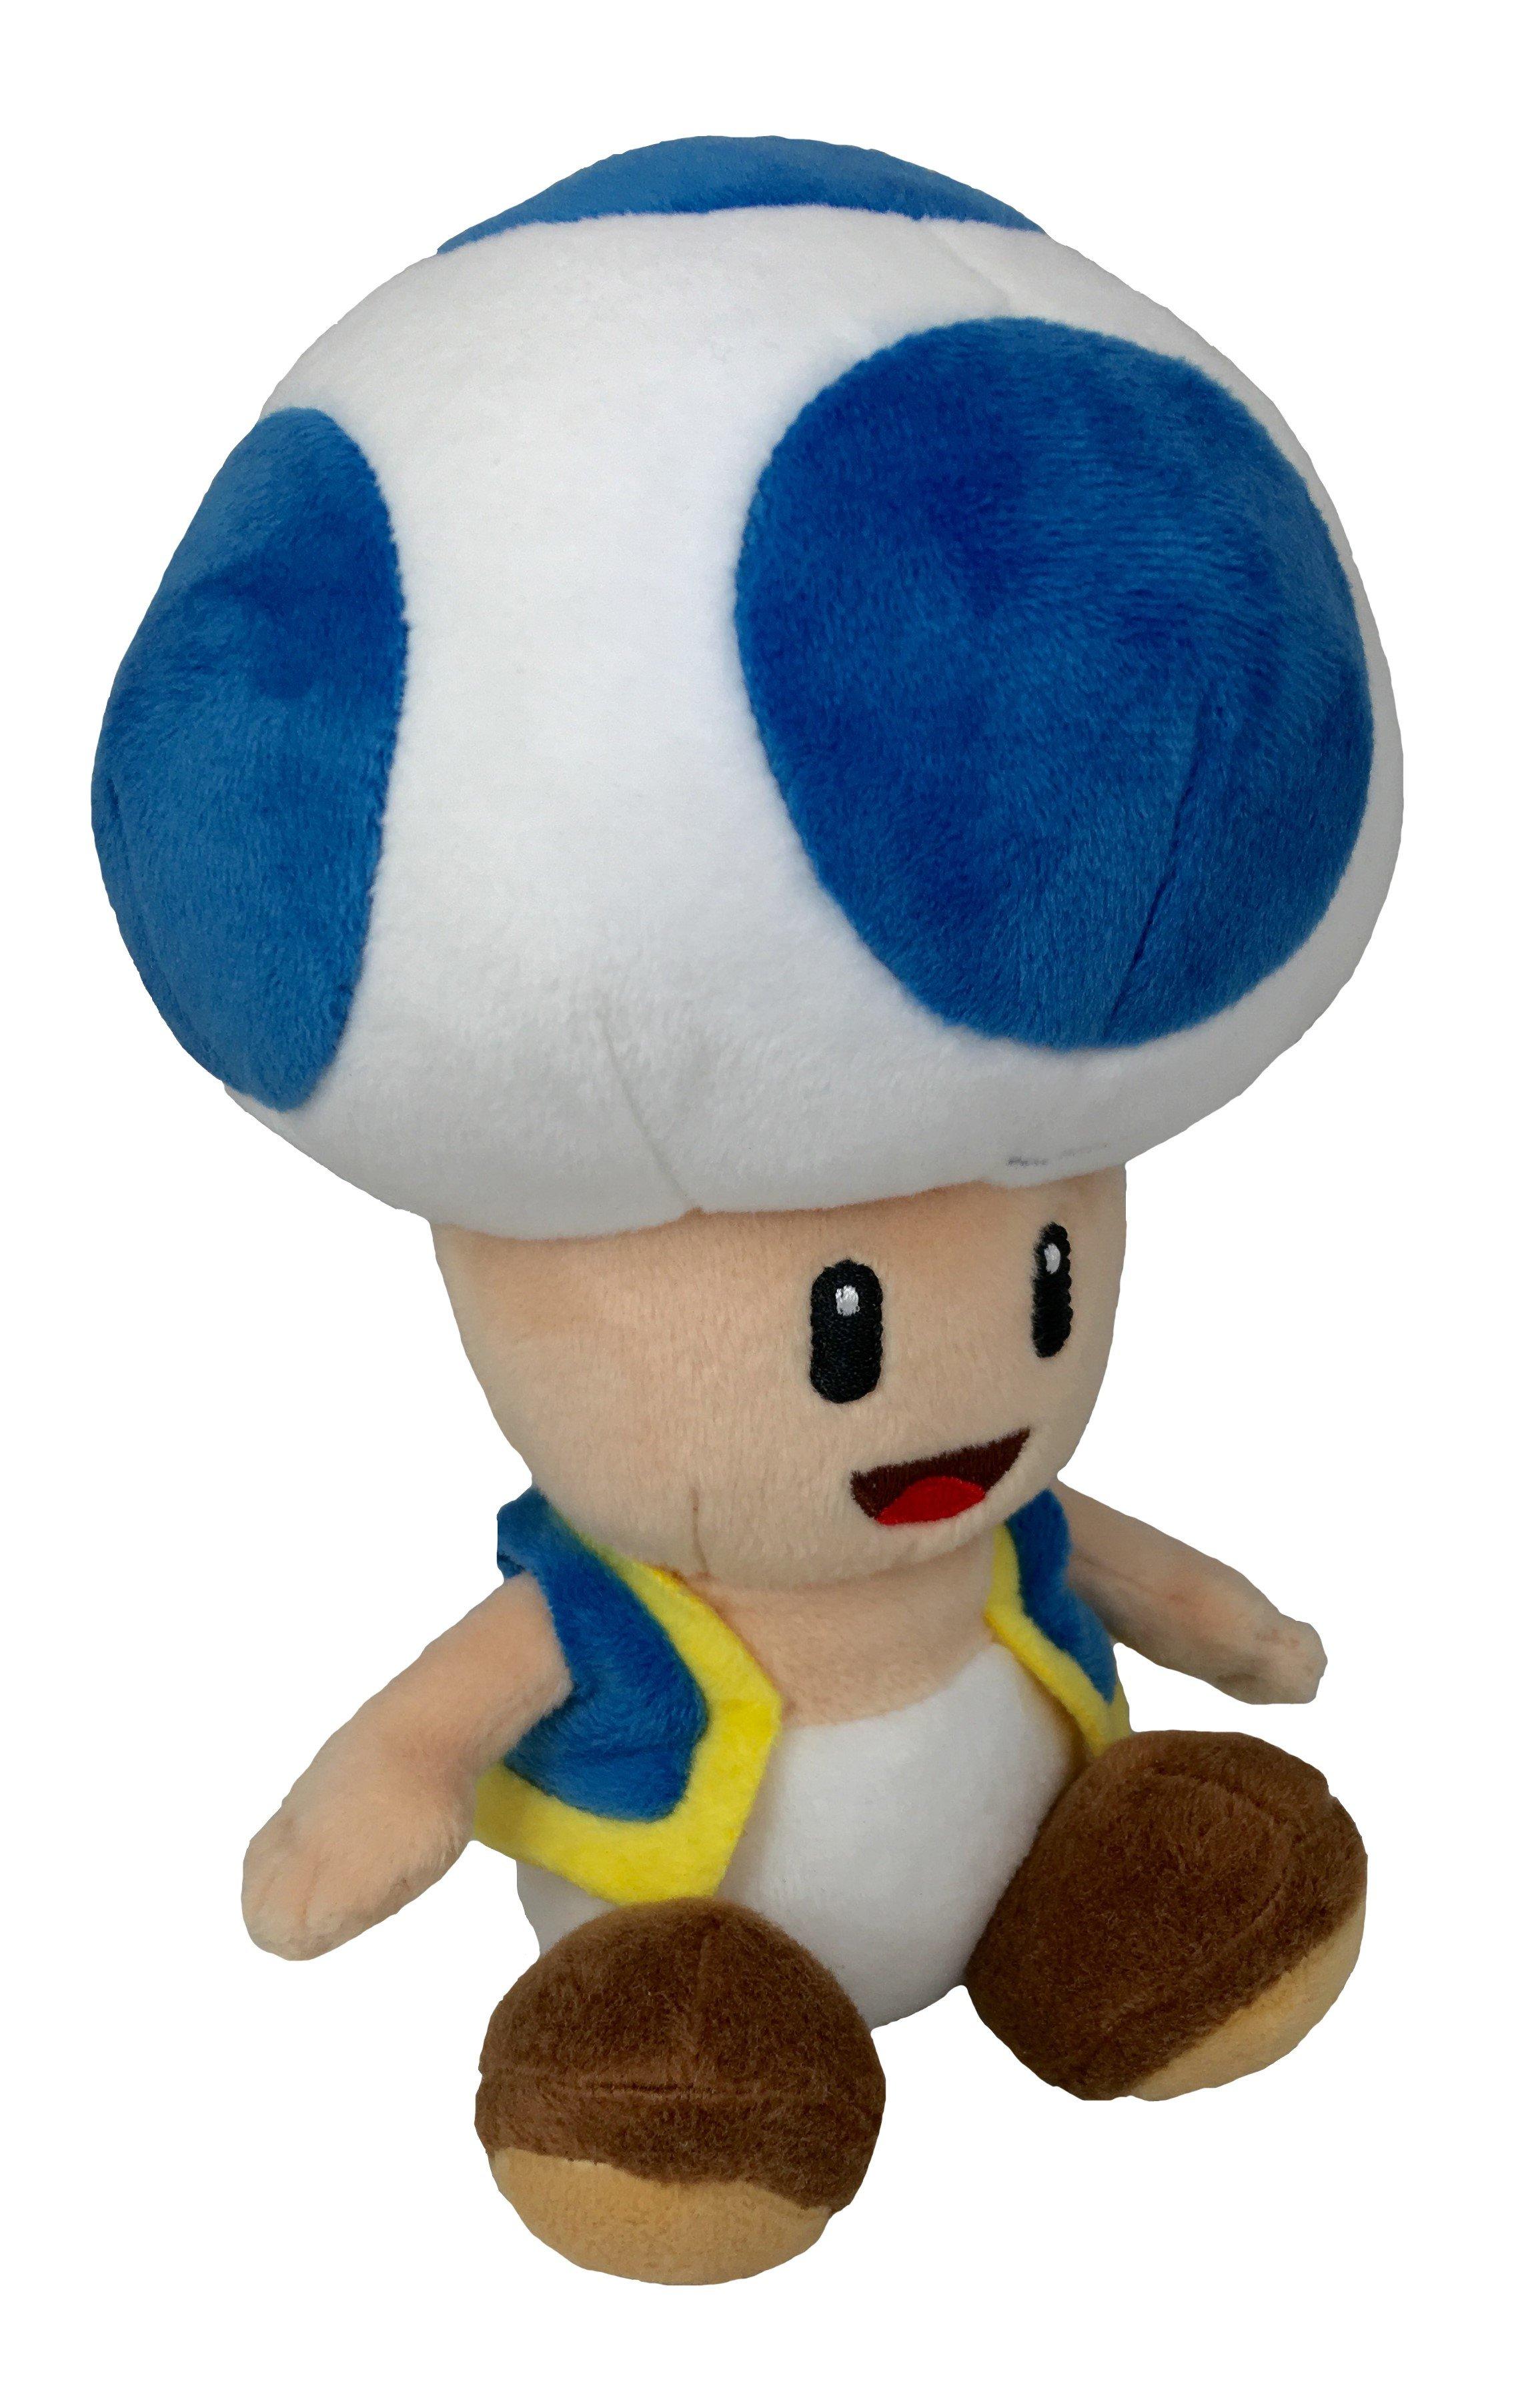 Blue Toad Super Mario Bros Brigade Plush Toy Stuffed Animal Soft Figure Doll 6" 